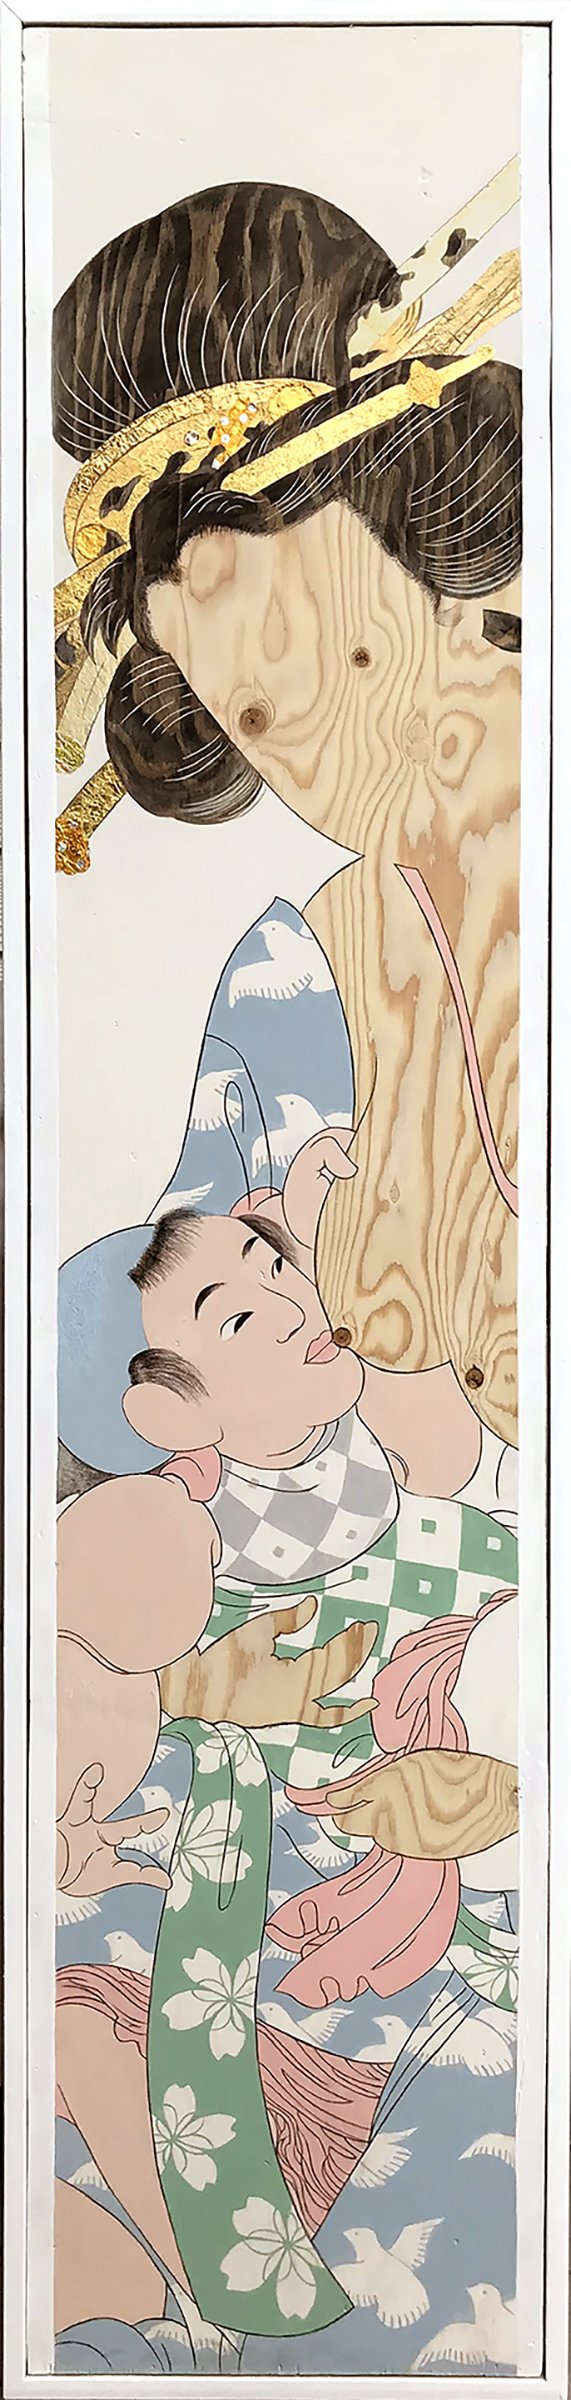 LCharters_From The Missing Women_Missing Mothers Series, Utamaro's Muse Nursing Child.jpg